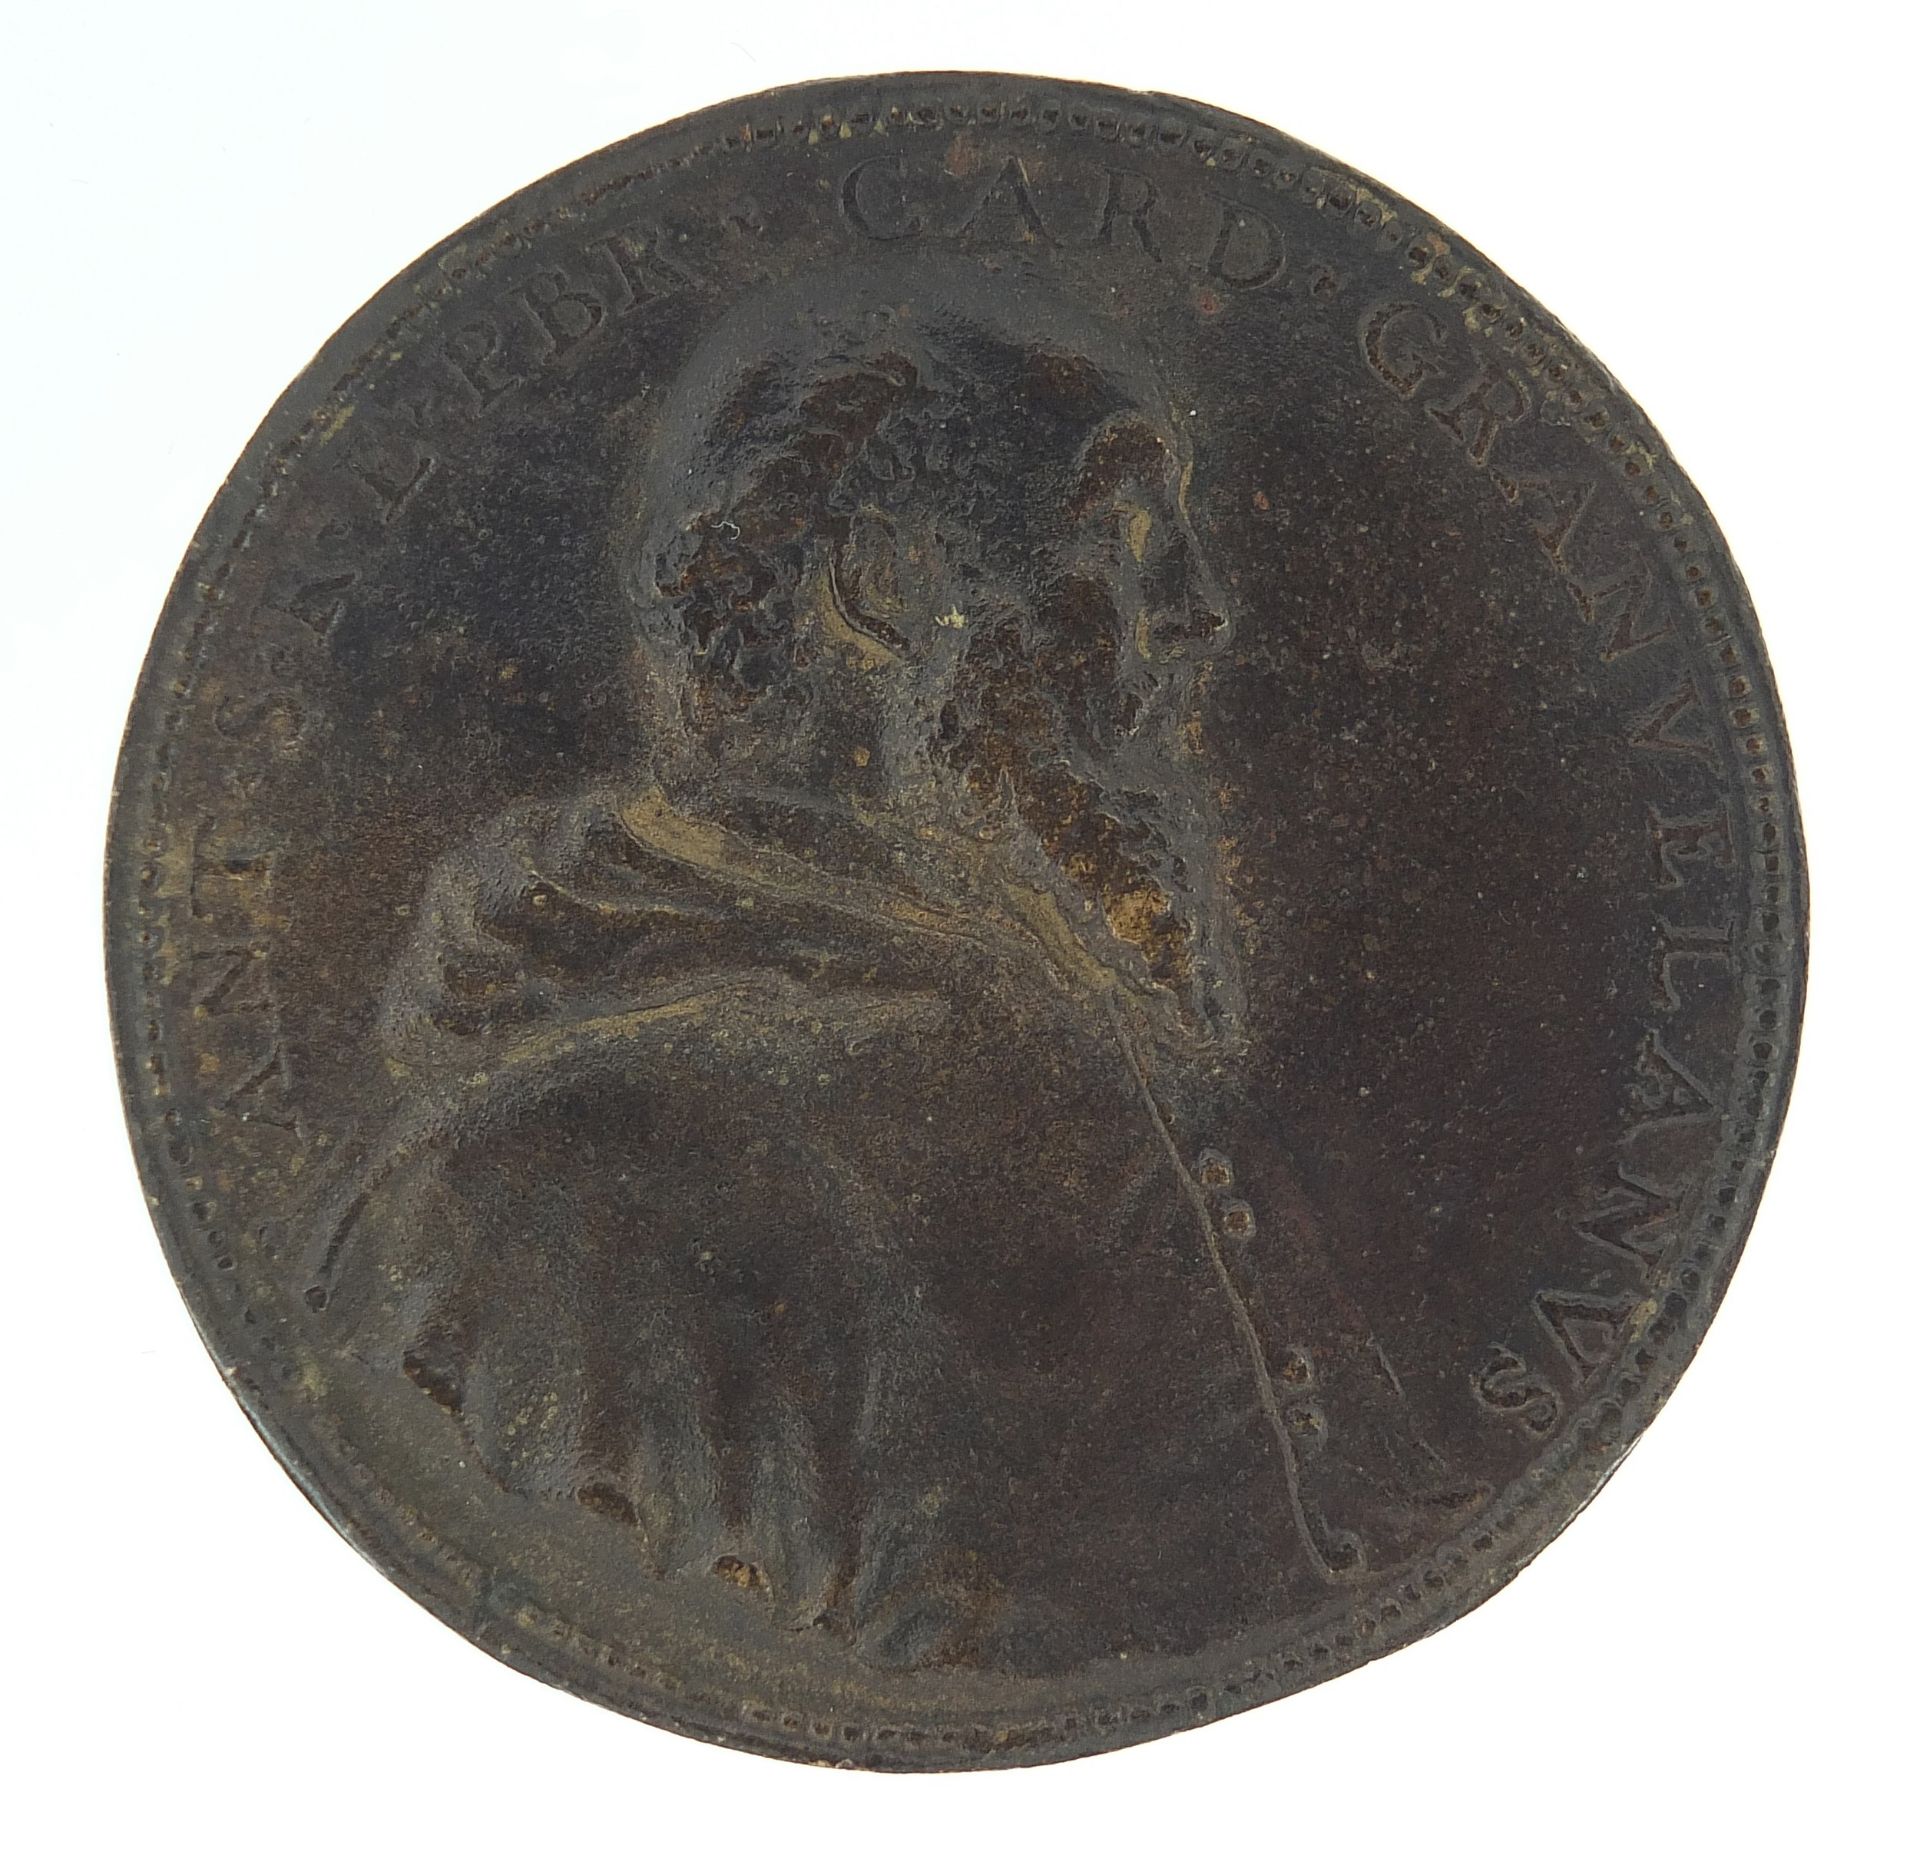 Antique bronze medallion with bust of Cardinal Antonio Perrenot de Granvela, 7.5cm in diameter - Image 2 of 2